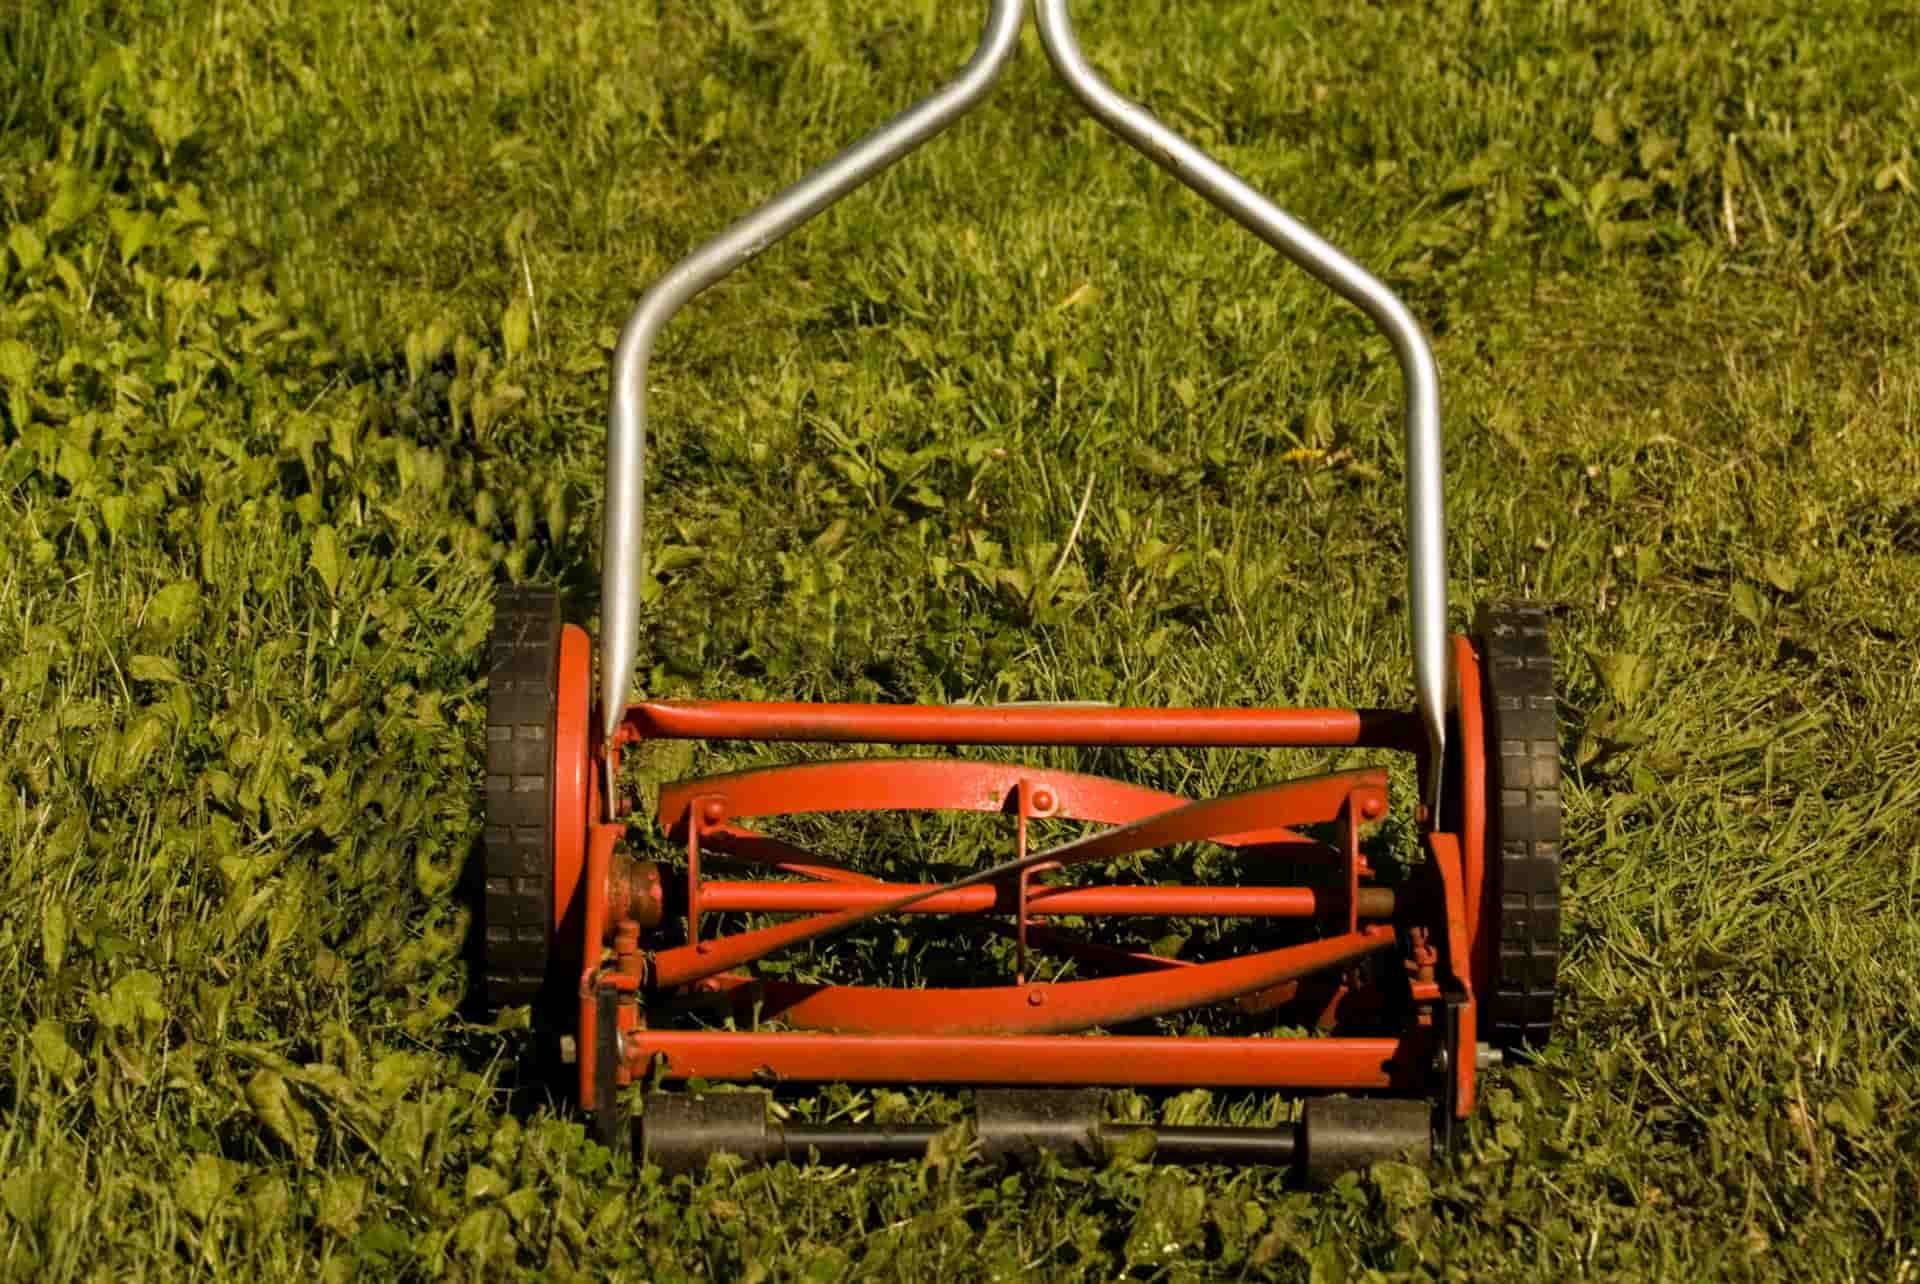 Manual-Reel-Lawn-Mower